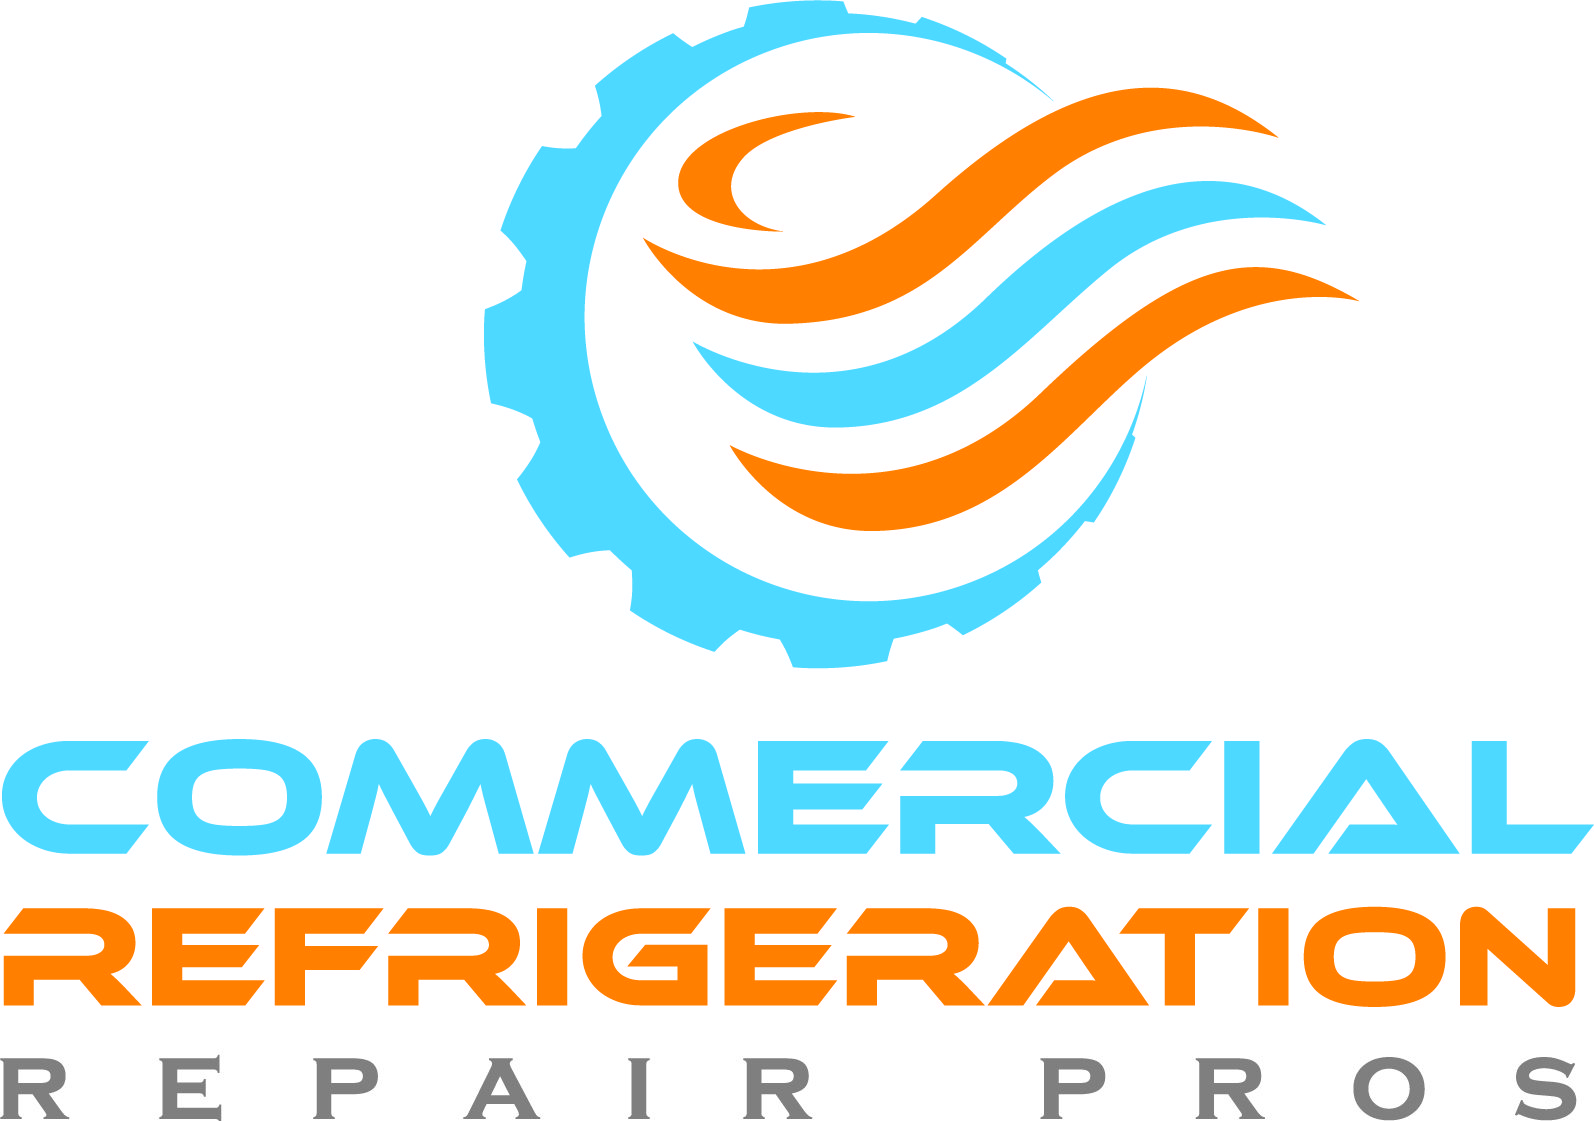 Commercial Refrigeration Repair Pros